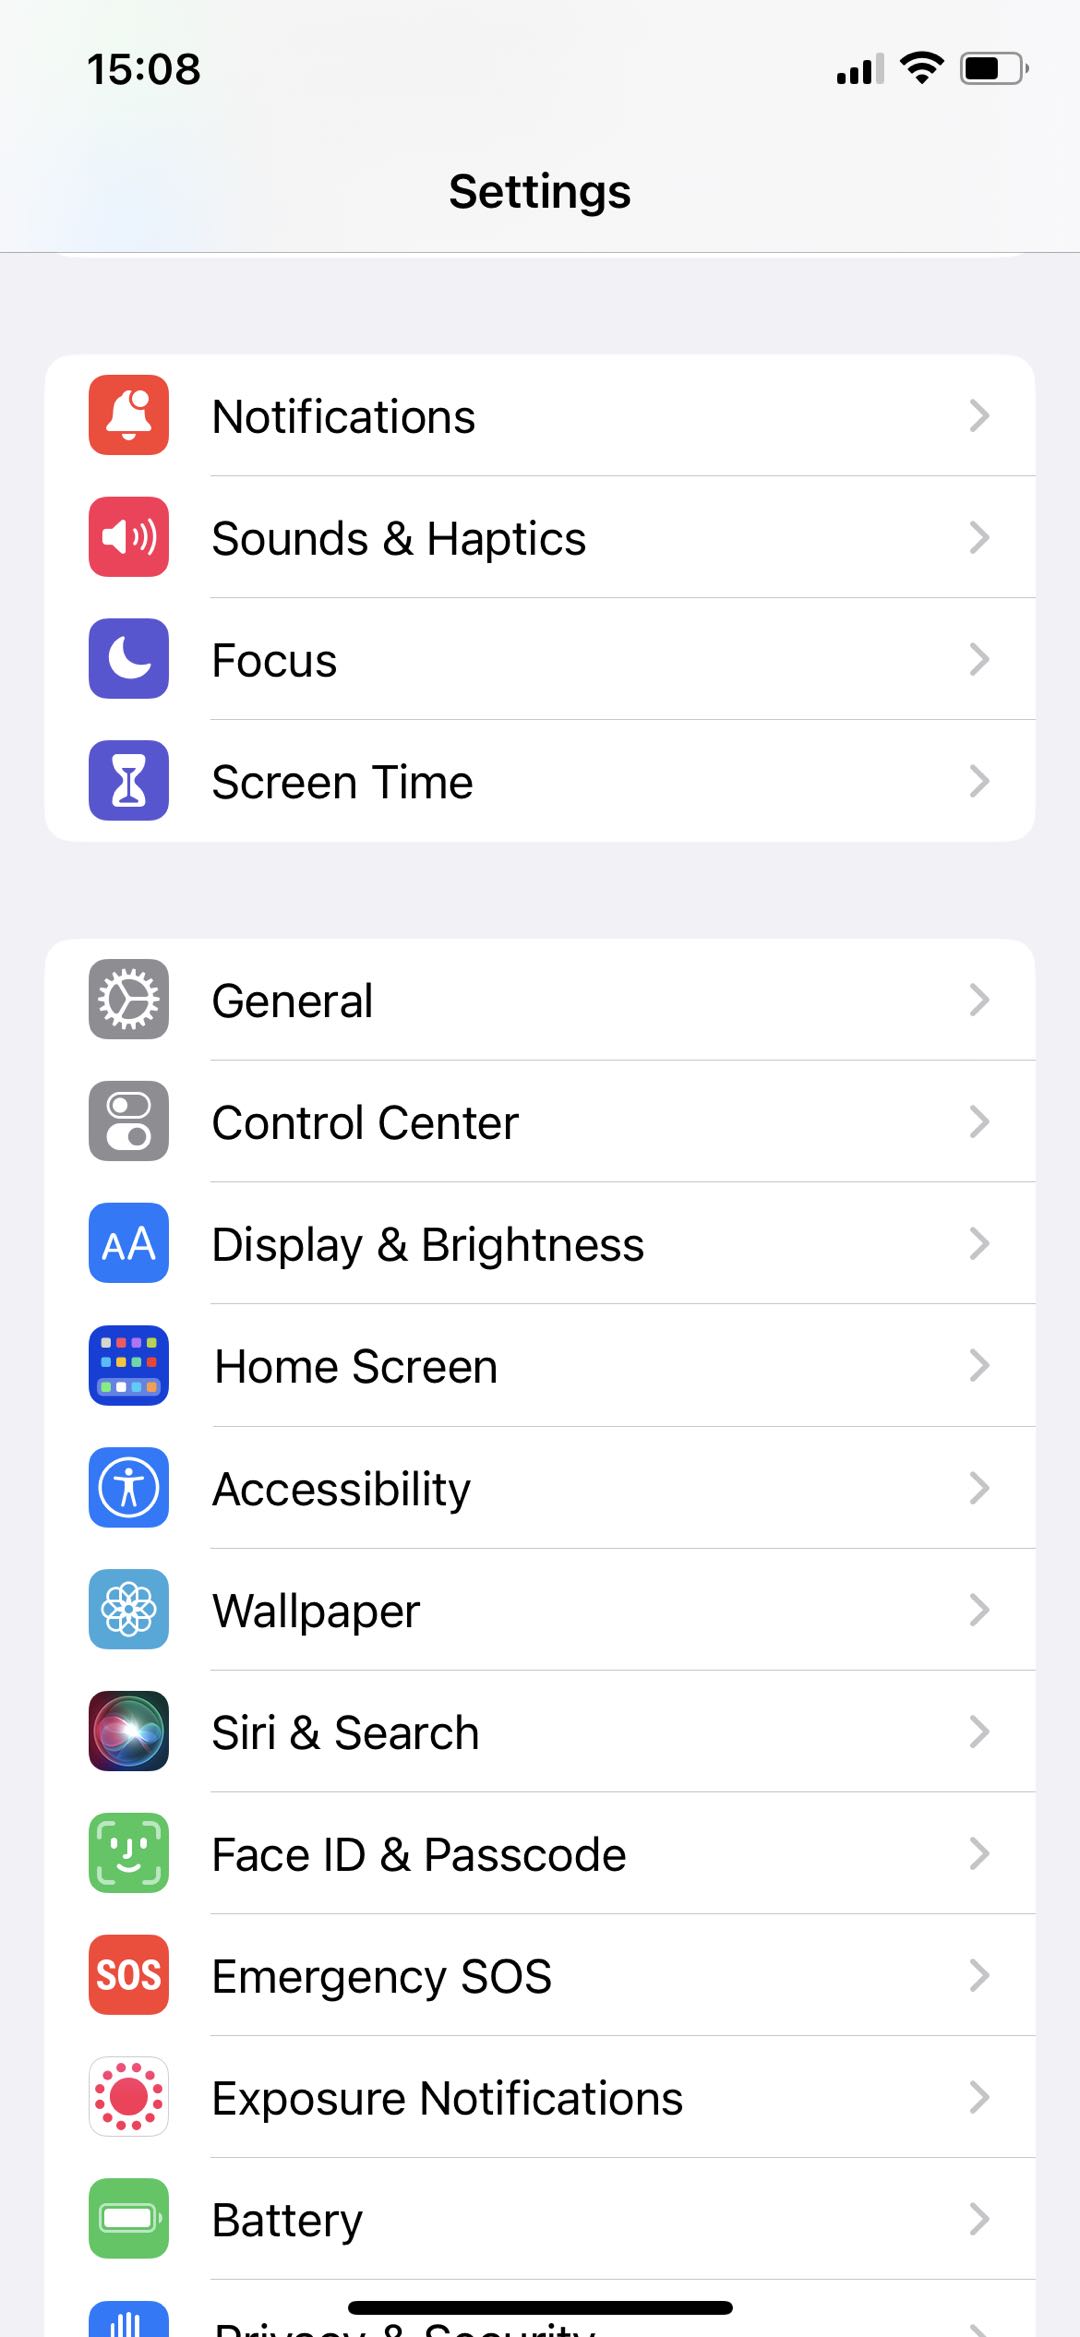 iPhone settings display and brightness